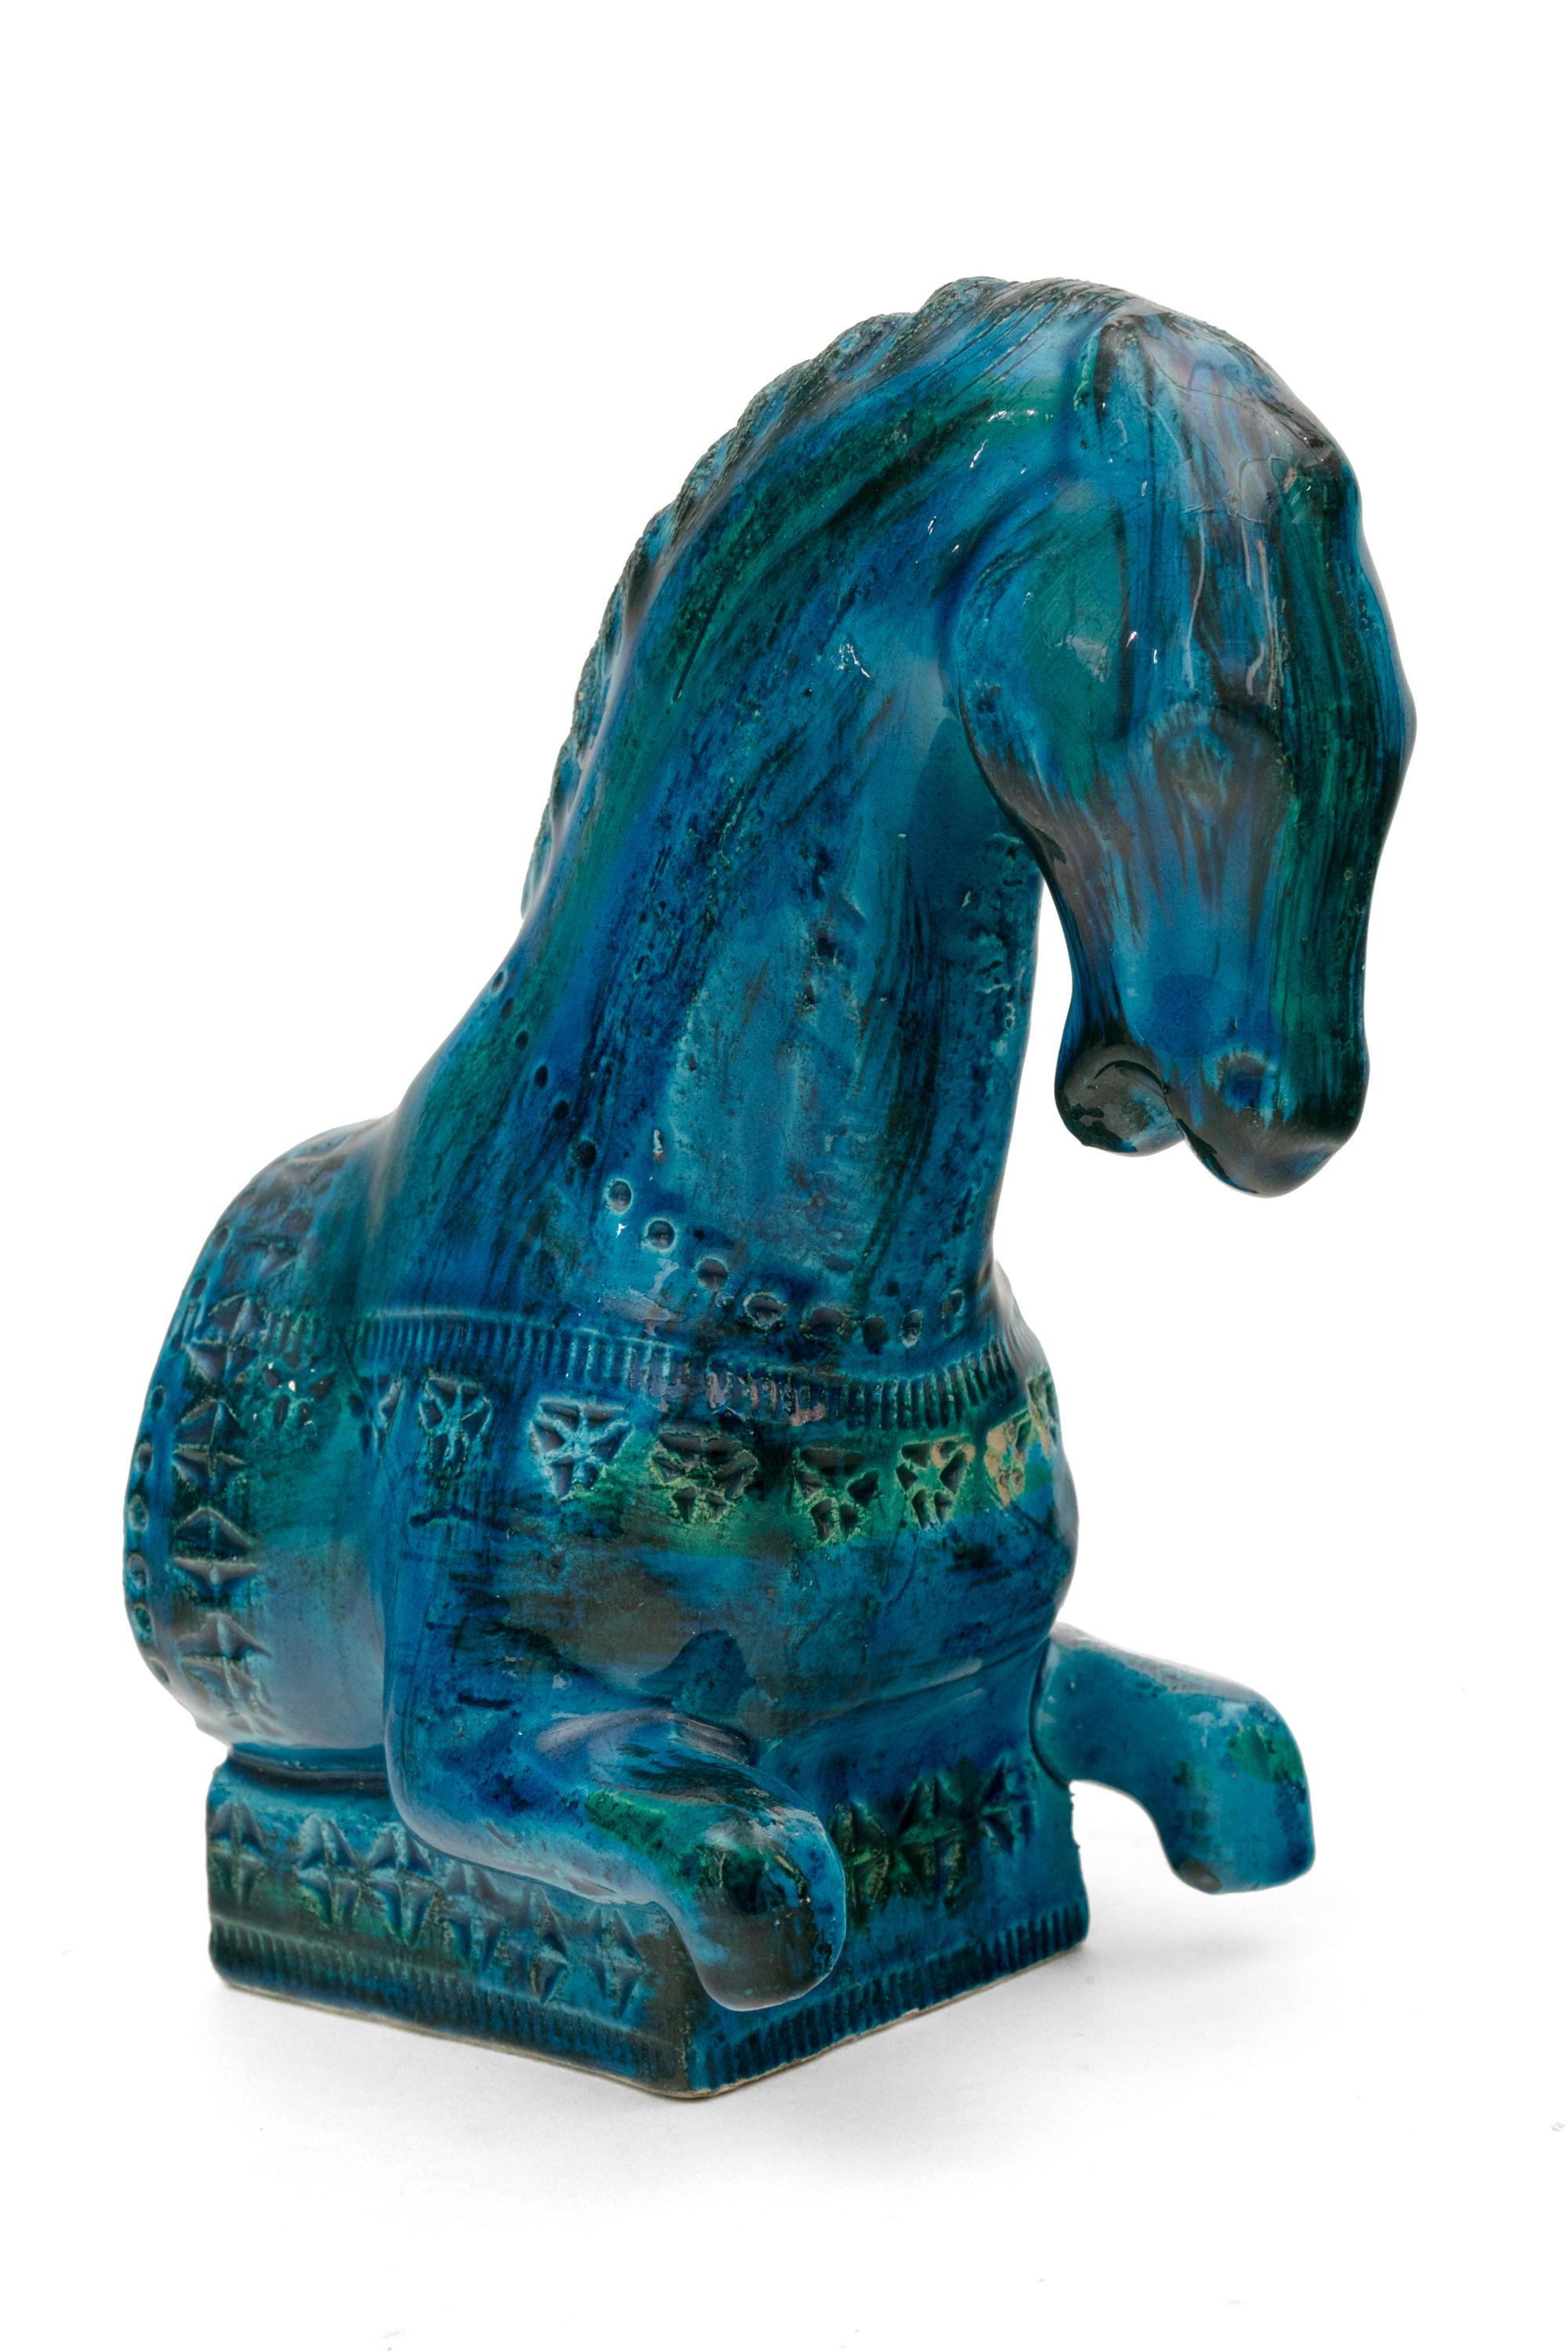 Glazed Bitossi 'Rimini Blu' Horse Bookends by Aldo Londi, Italy, 1960s